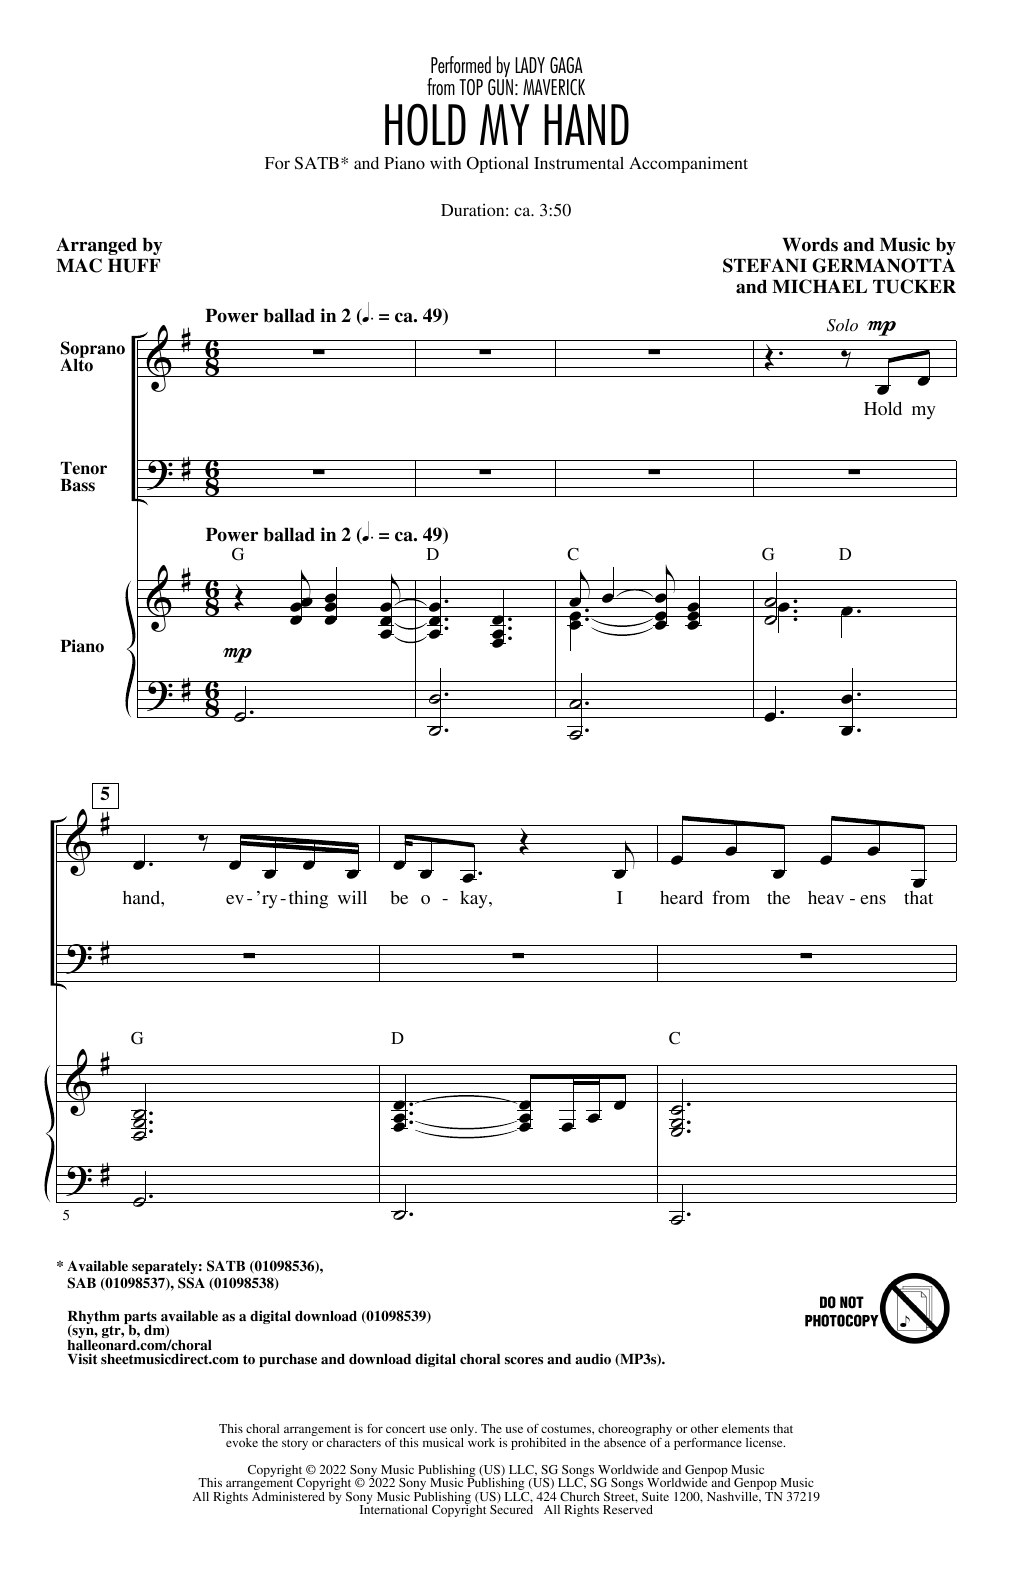 Lady Gaga Hold My Hand (from Top Gun: Maverick) (arr. Mac Huff) Sheet Music Notes & Chords for SAB Choir - Download or Print PDF